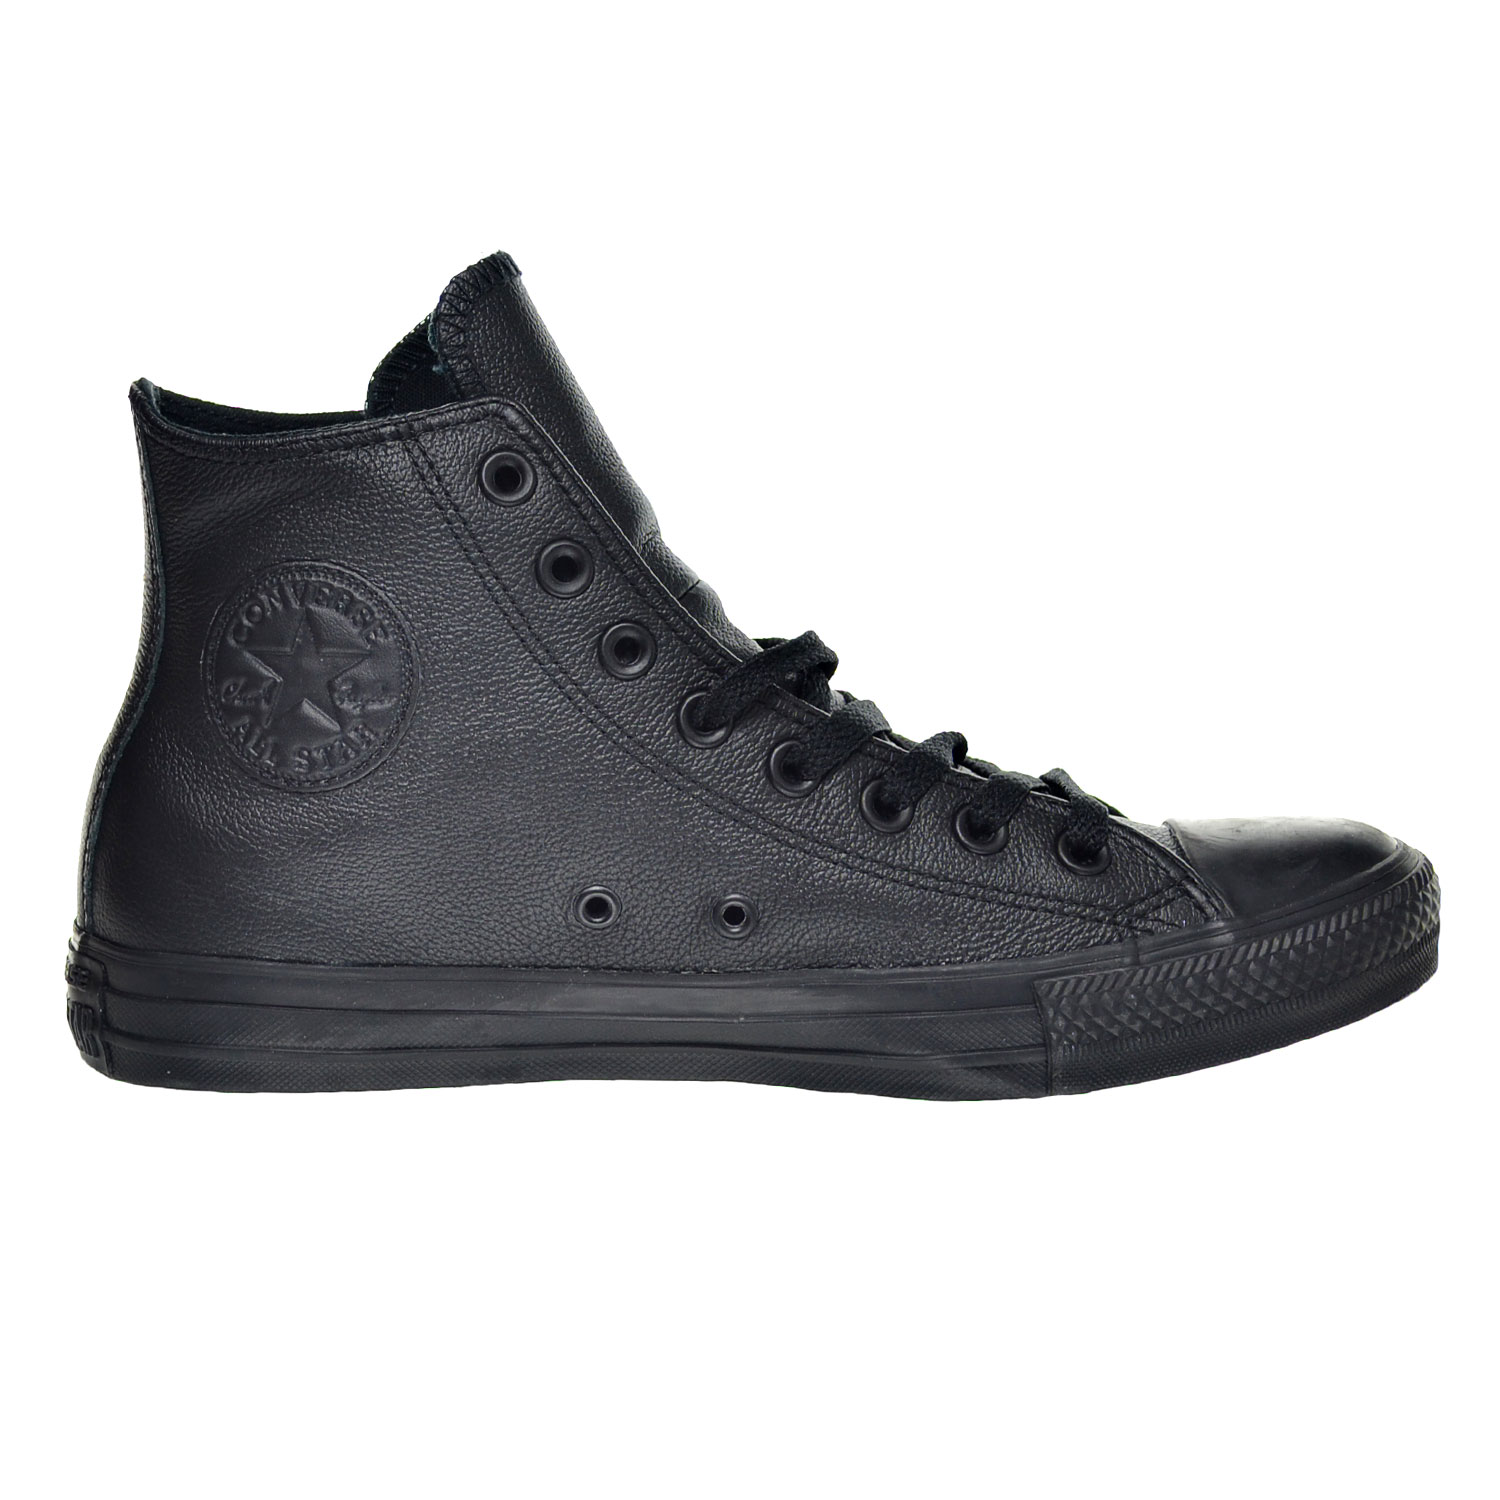 Converse Chuck Taylor All Star HI Men's Shoe Black Mono 135251c | eBay